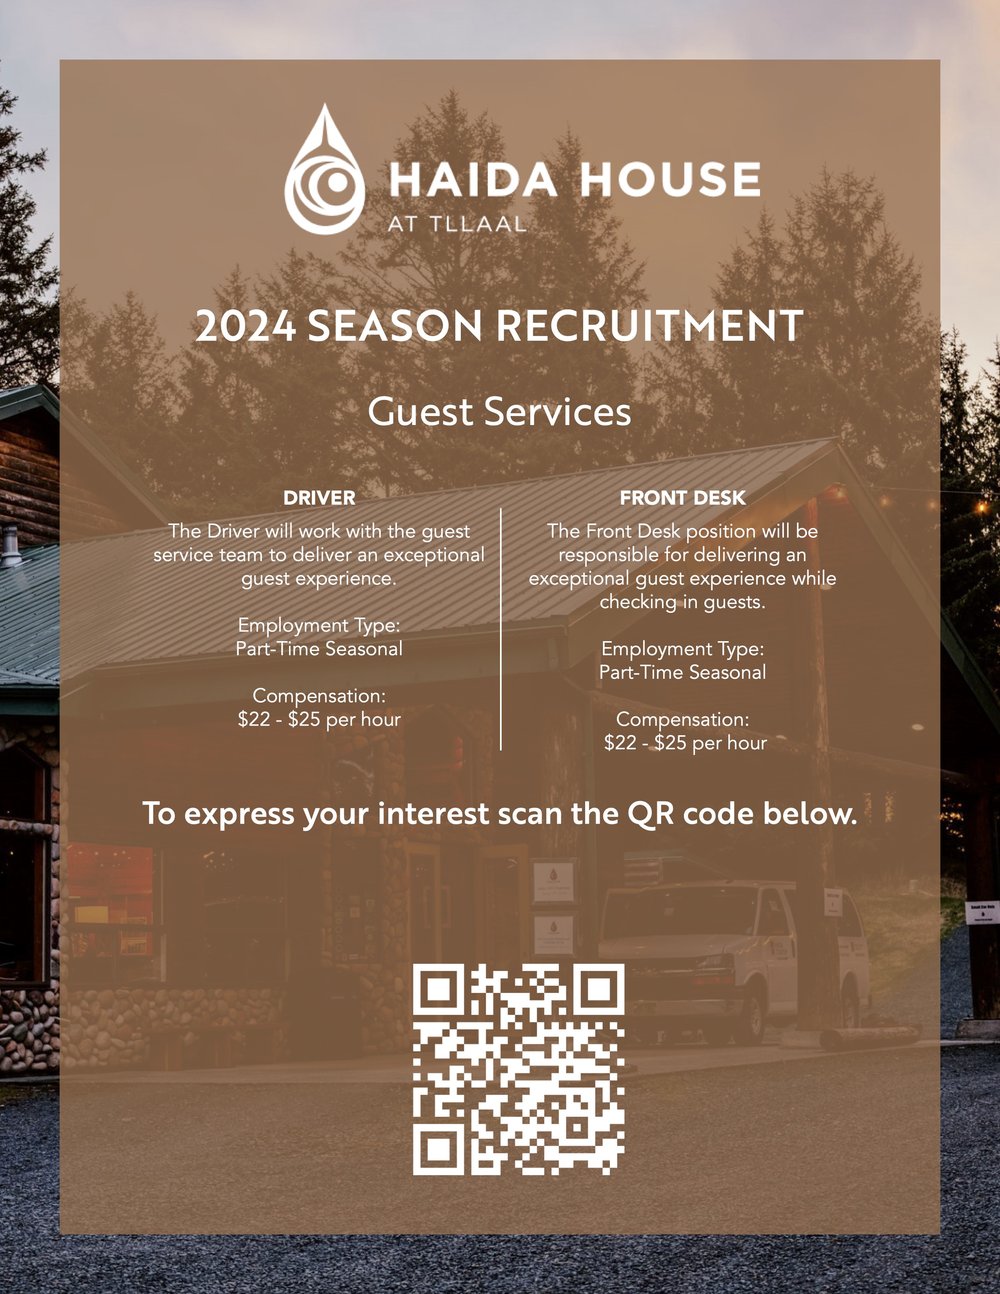 HH2024 Season Recruitment - Guest Services.jpg